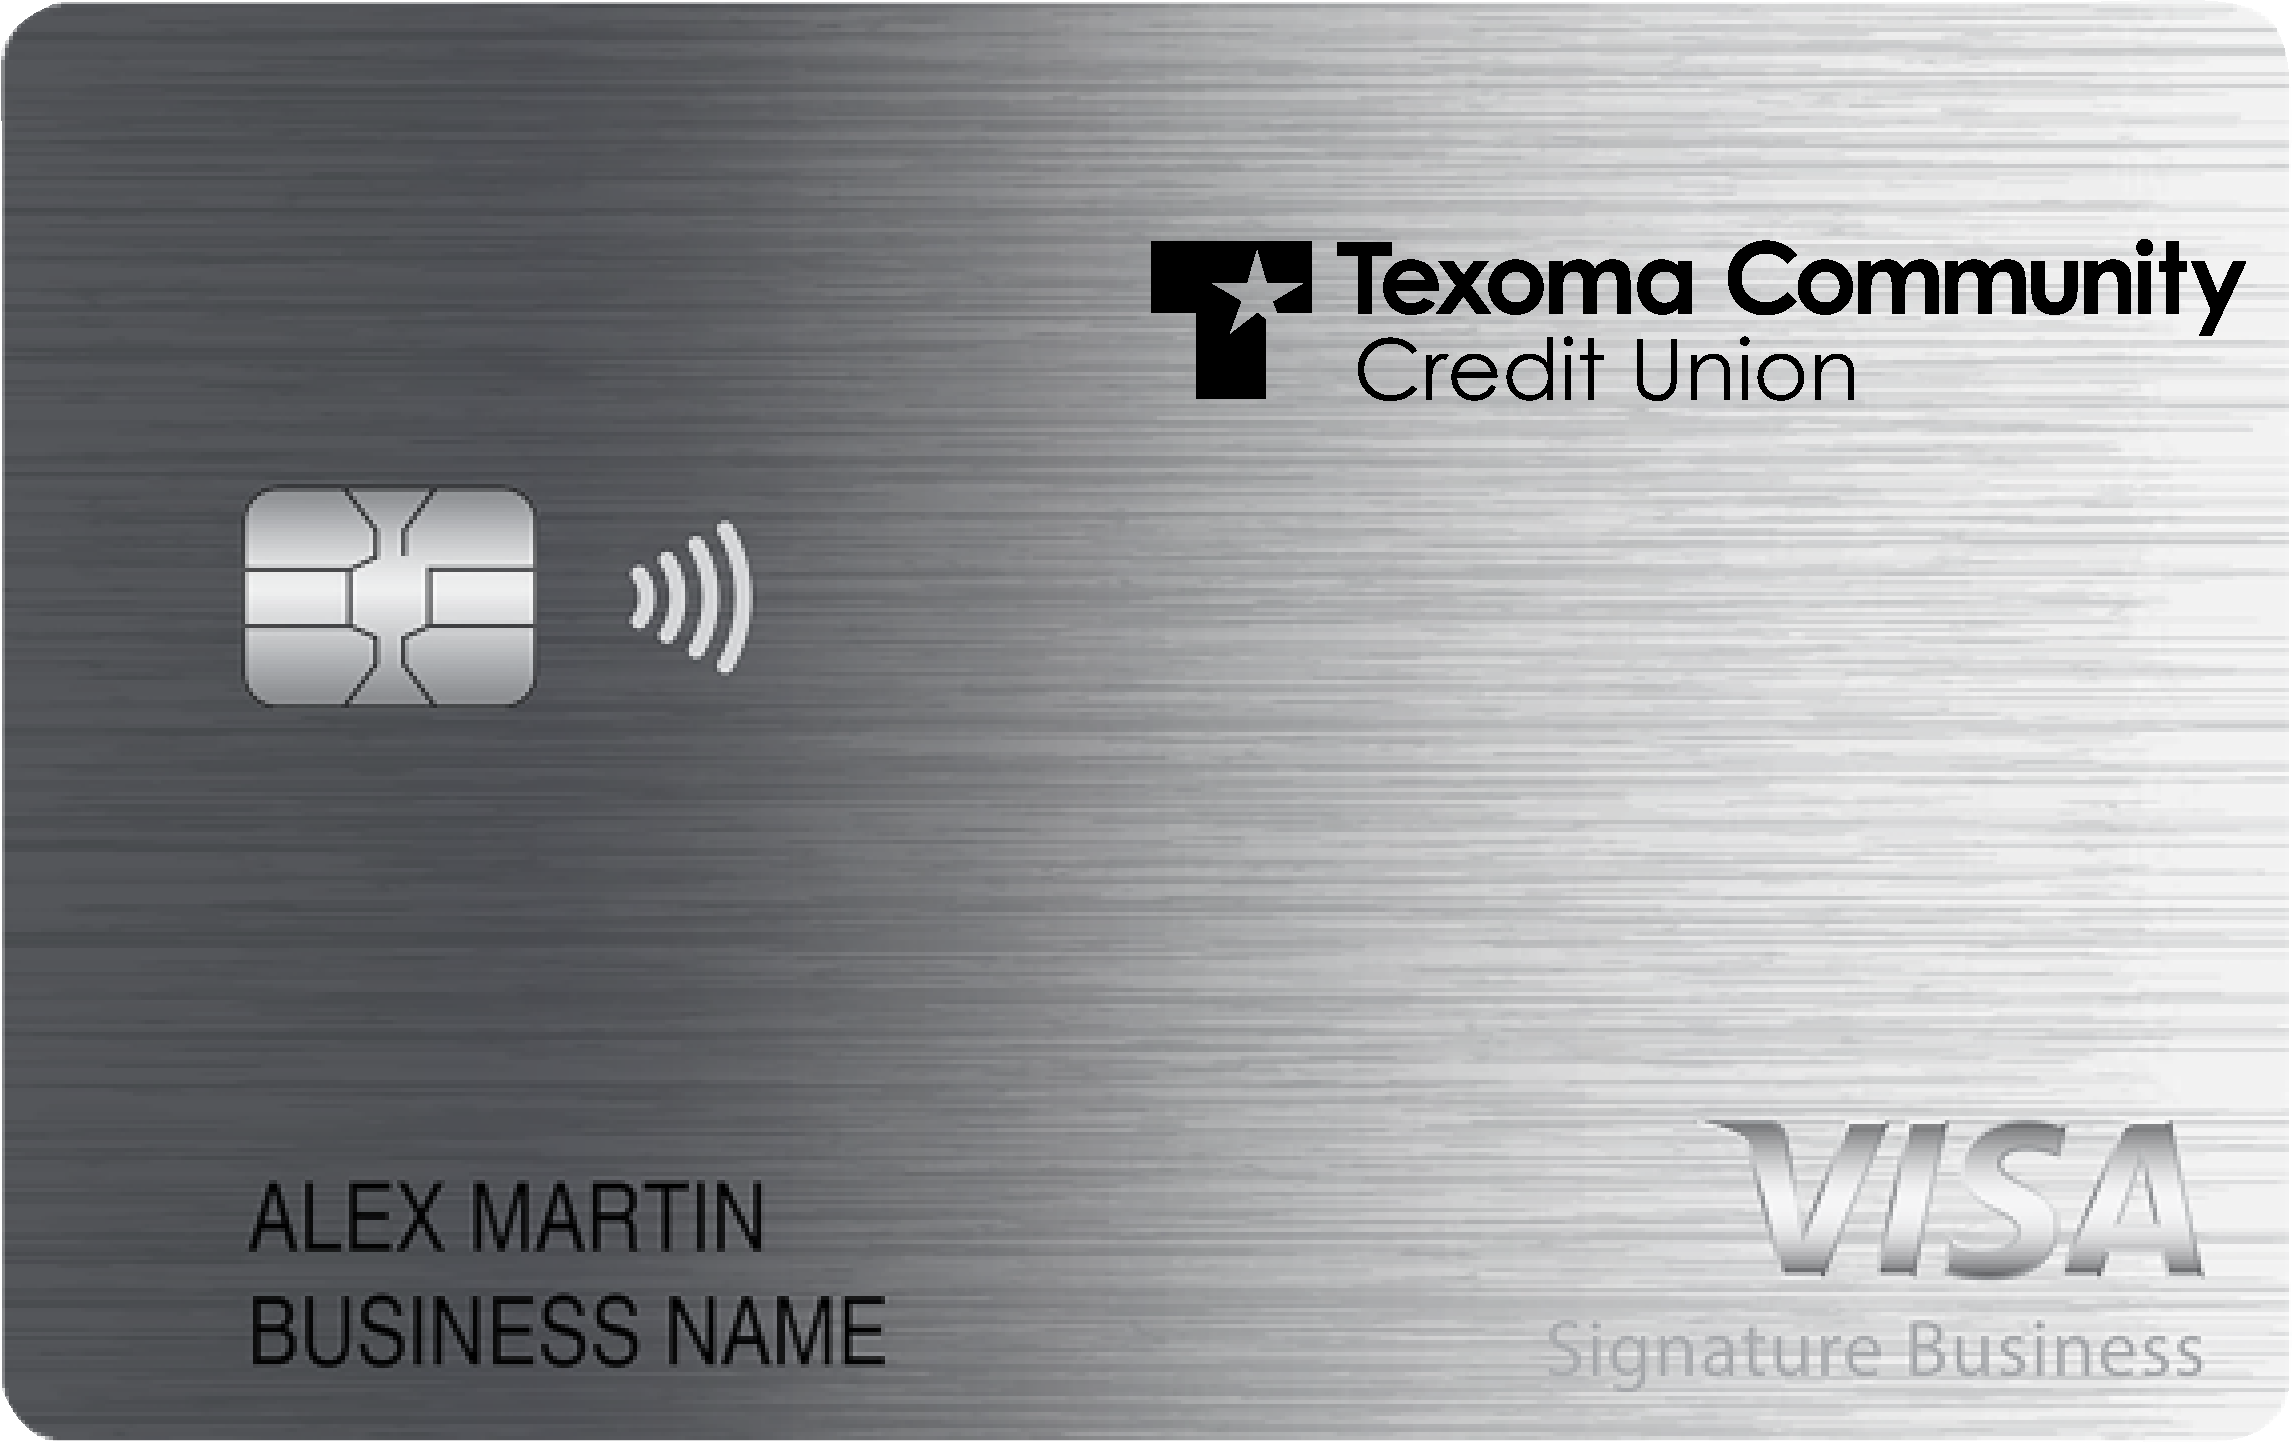 Texoma Community Credit Union Smart Business Rewards Card